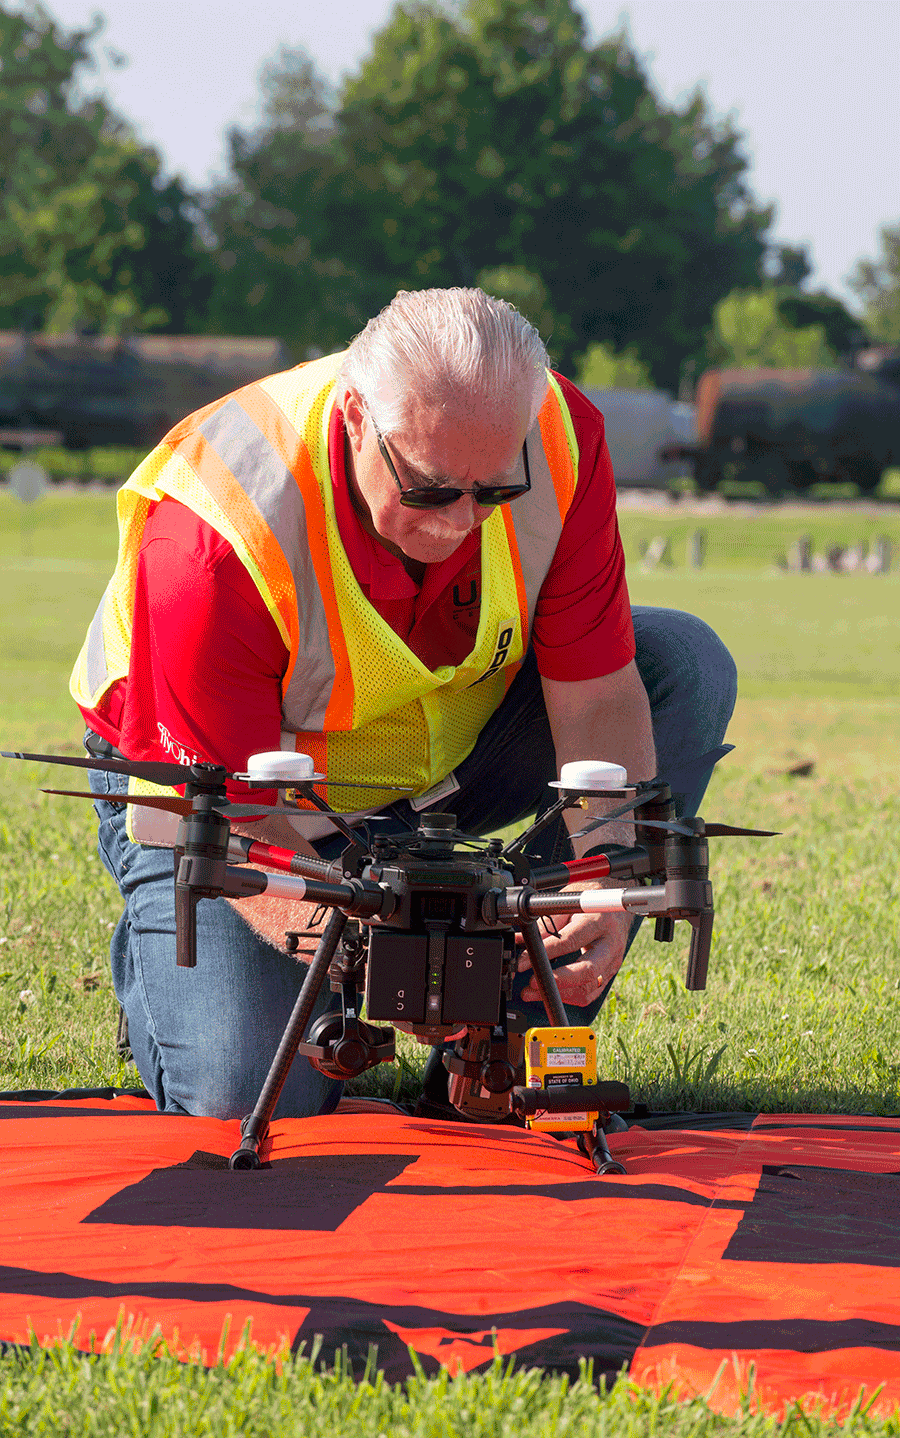 Man with orange vest kneels on orange landing pad to calibrate a reconnaissance drone.